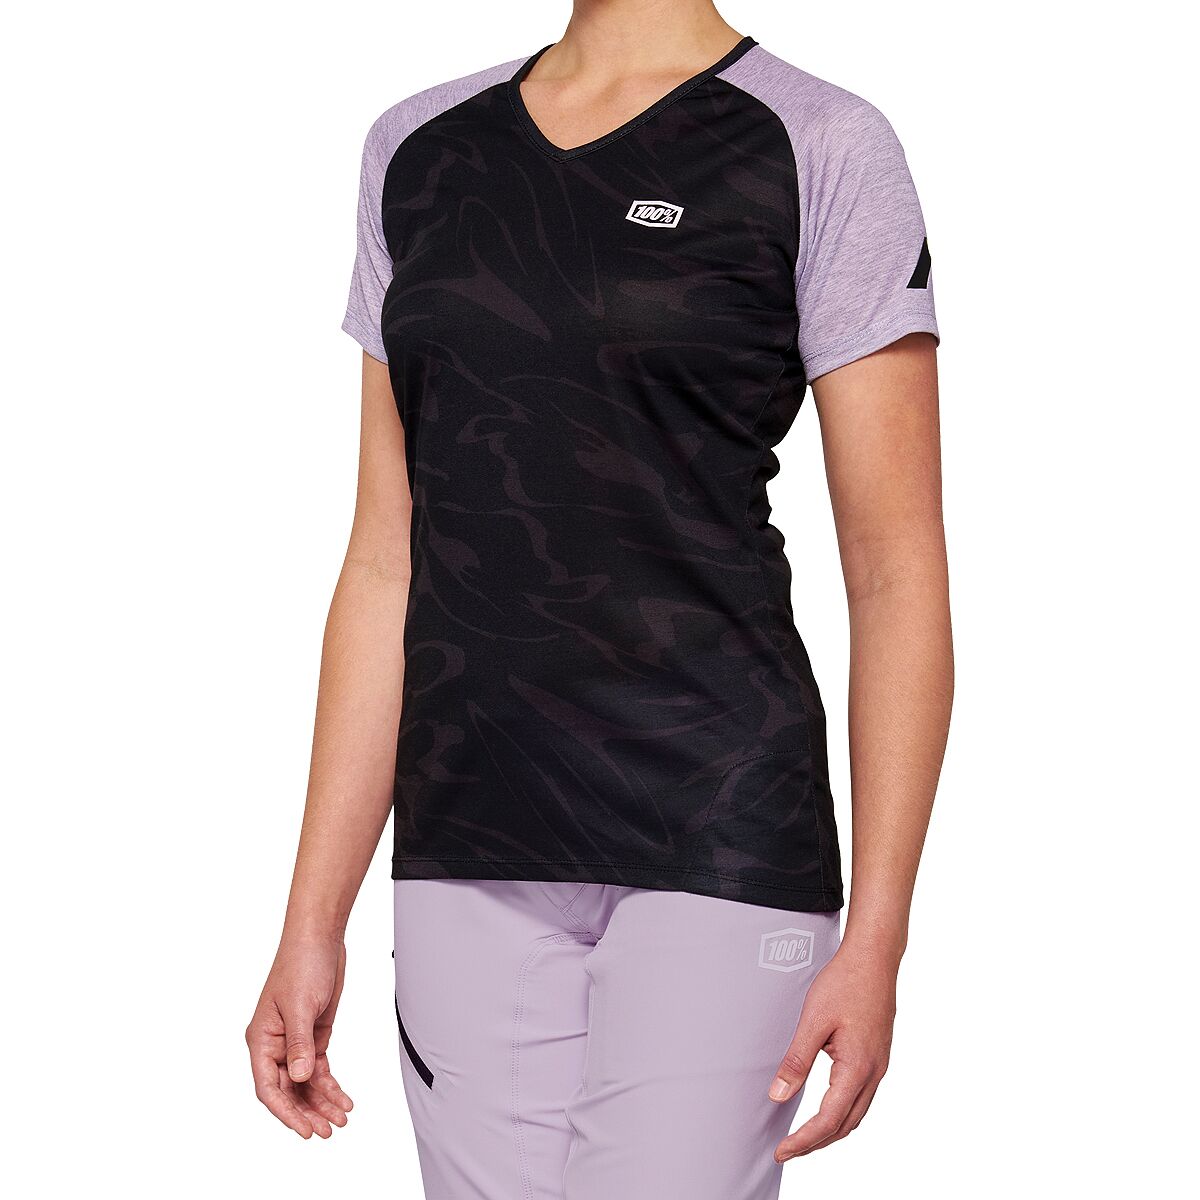 100% Airmatic Short-Sleeve Jersey - Women's